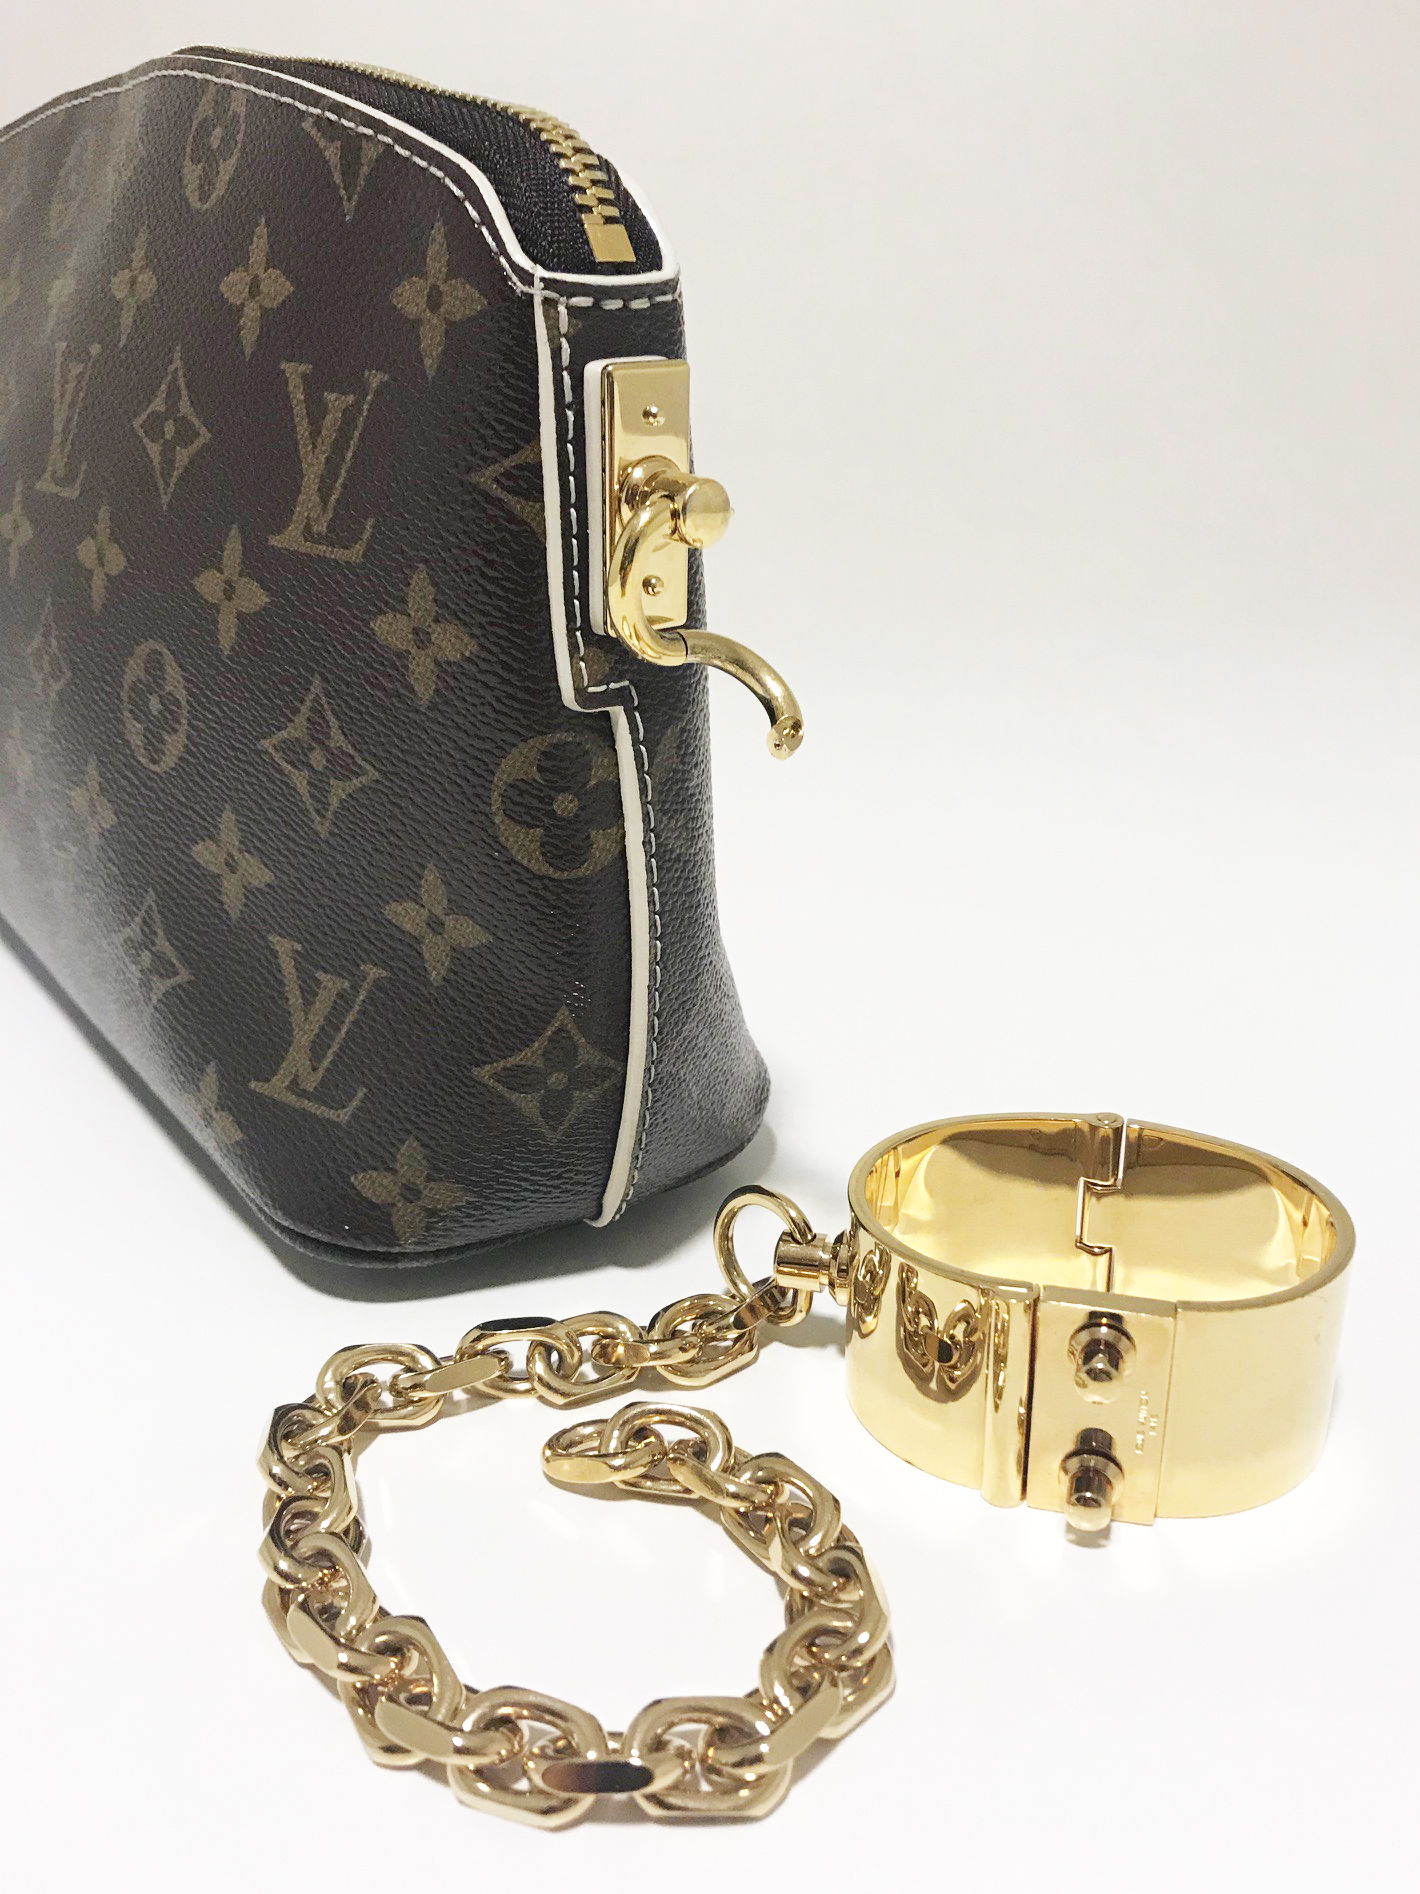 Louis Vuitton Monogram Canvas Gold Chain Clutch Cuff Bag with All